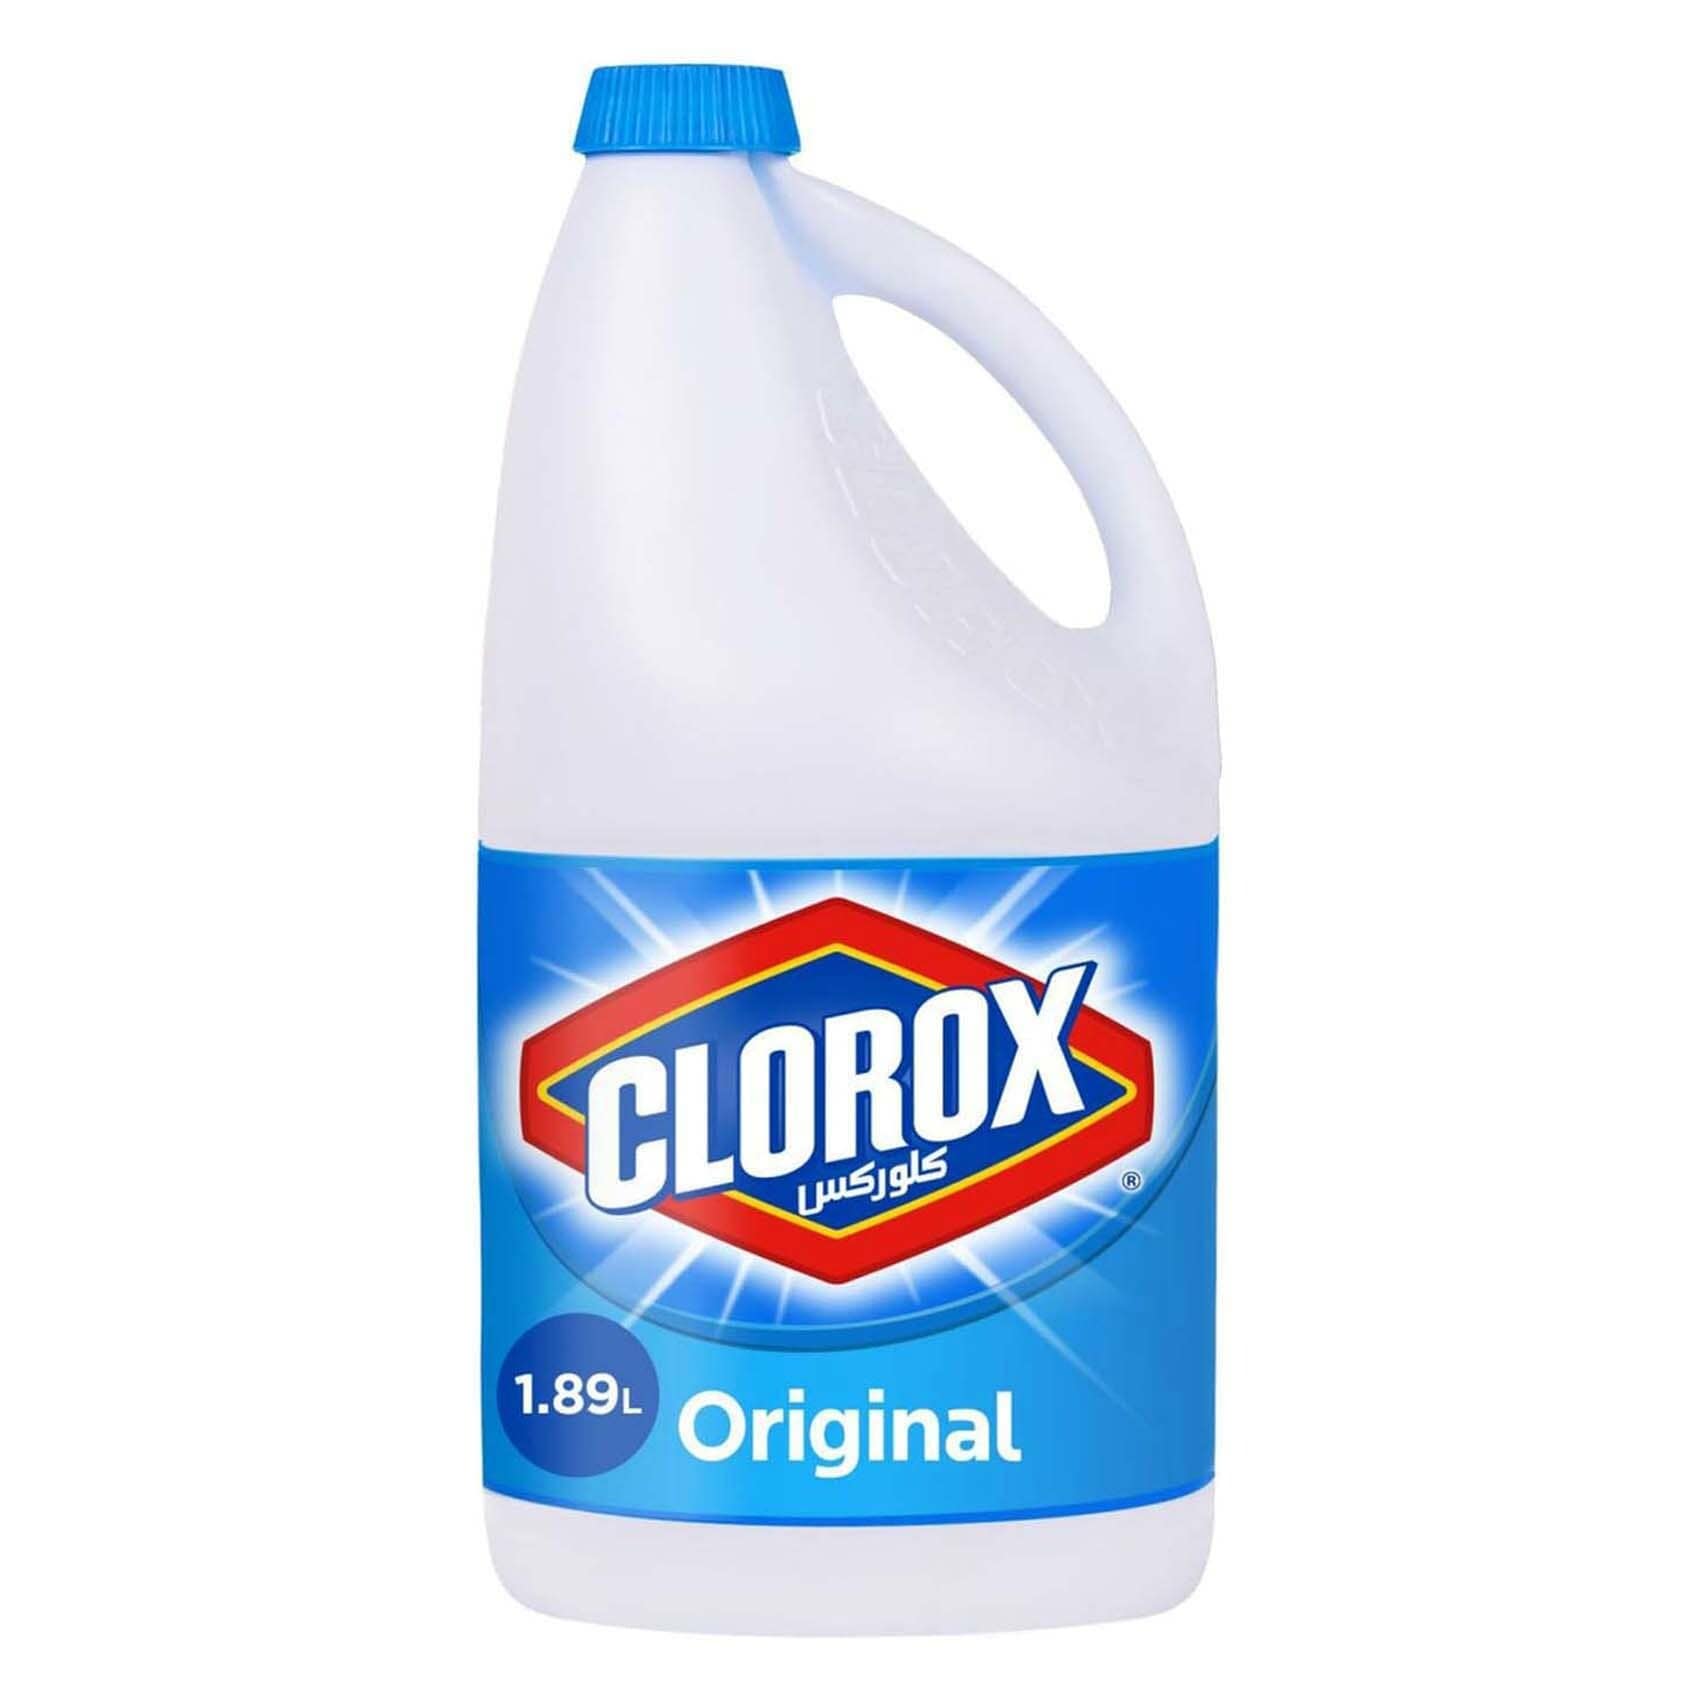 Buy Clorox Original Liquid Bleach 1.89L Online - Shop Cleaning ...